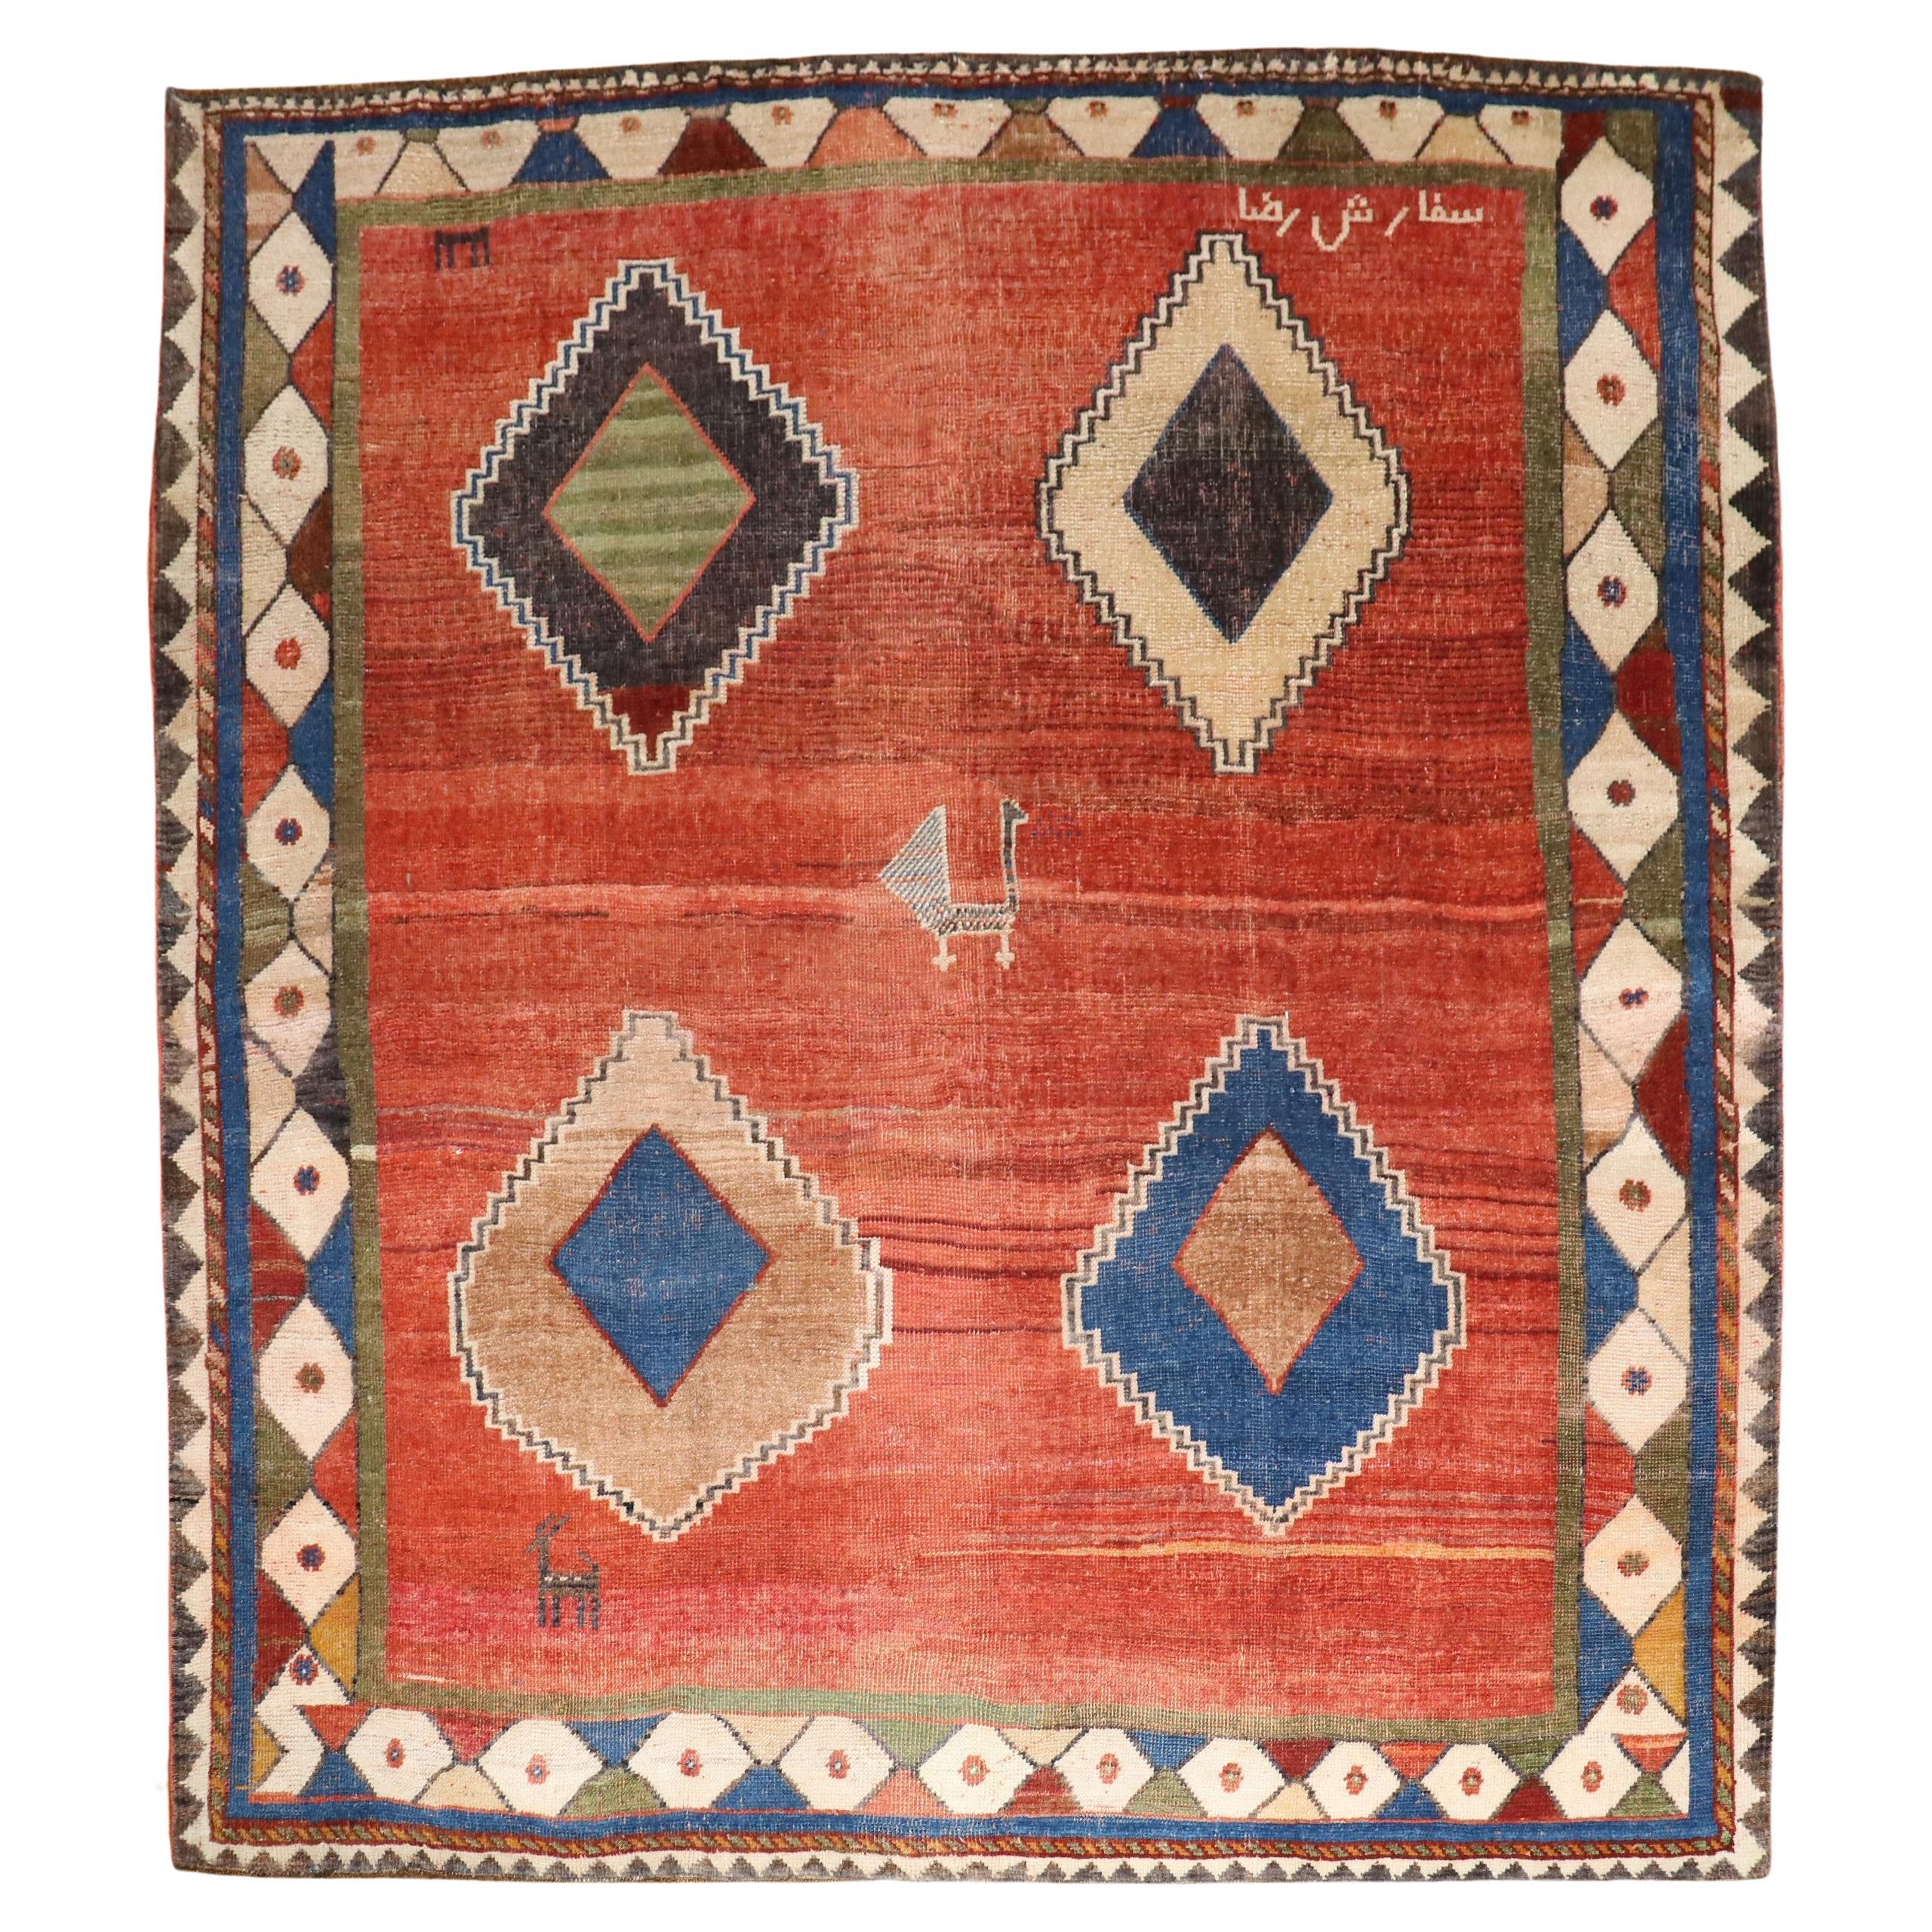 Quadratischer antiker persischer Gabbeh-Teppich aus der Zabihi-Kollektion